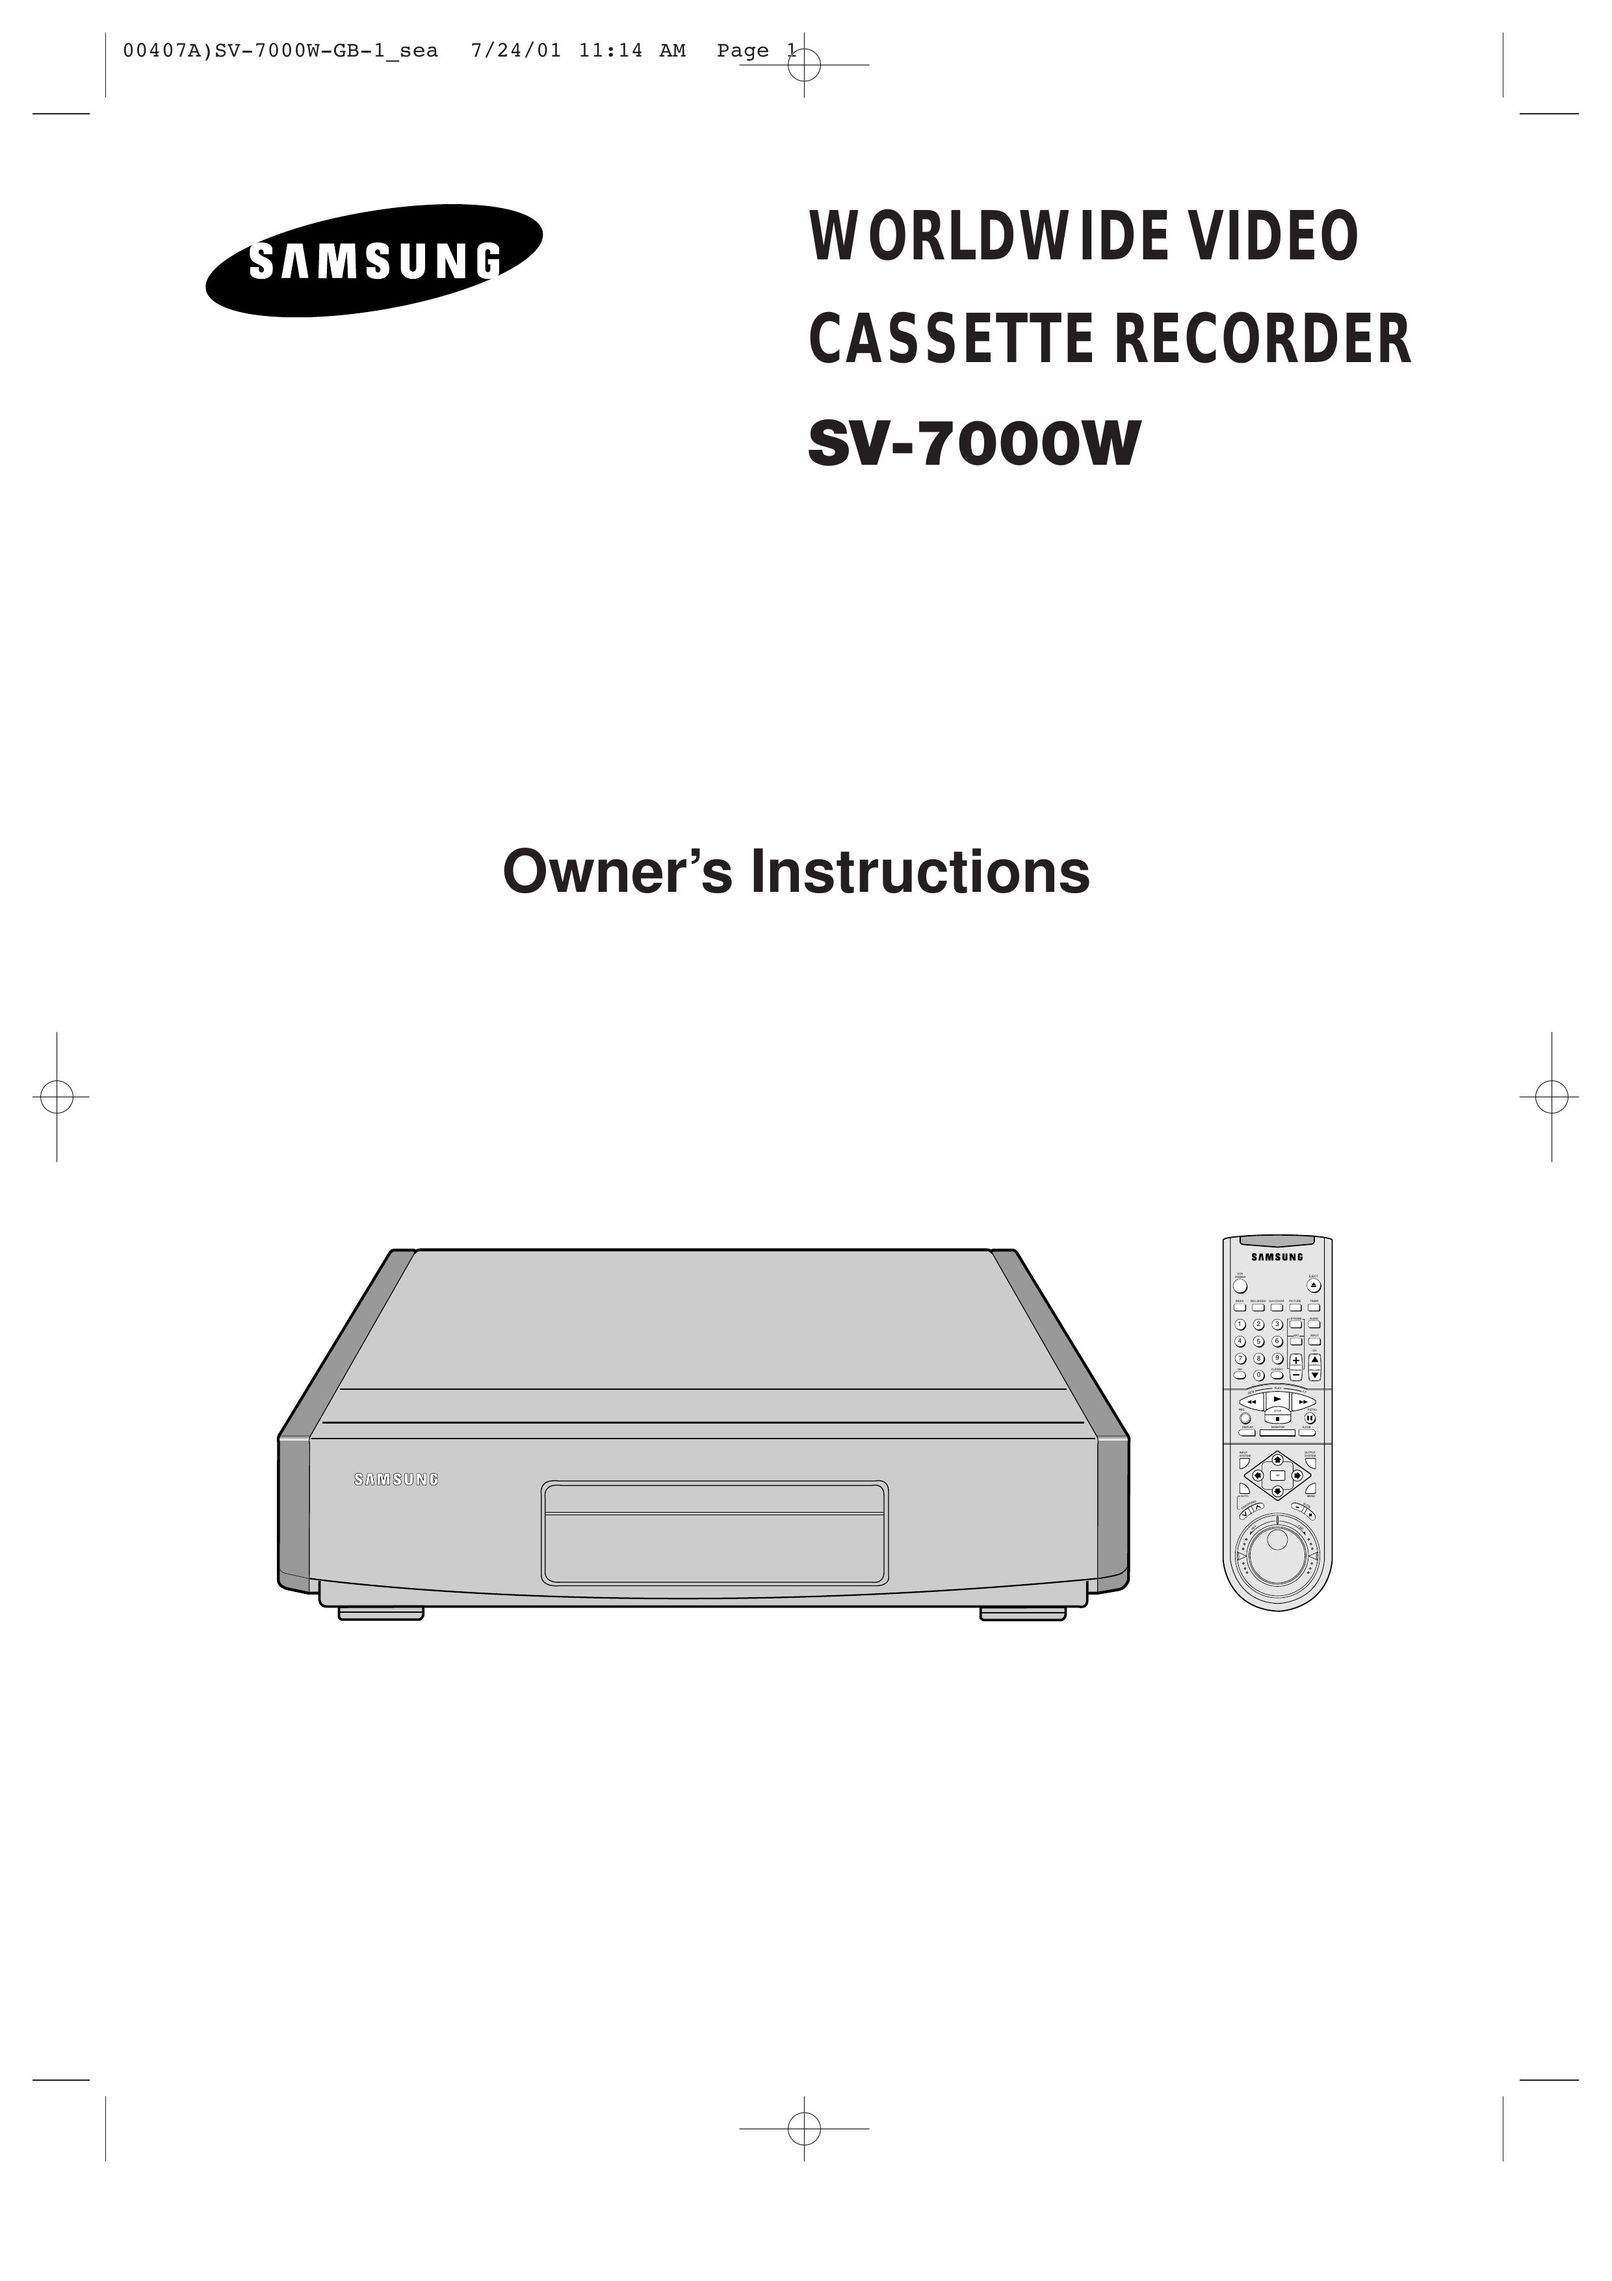 Samsung SV-7000W VCR User Manual